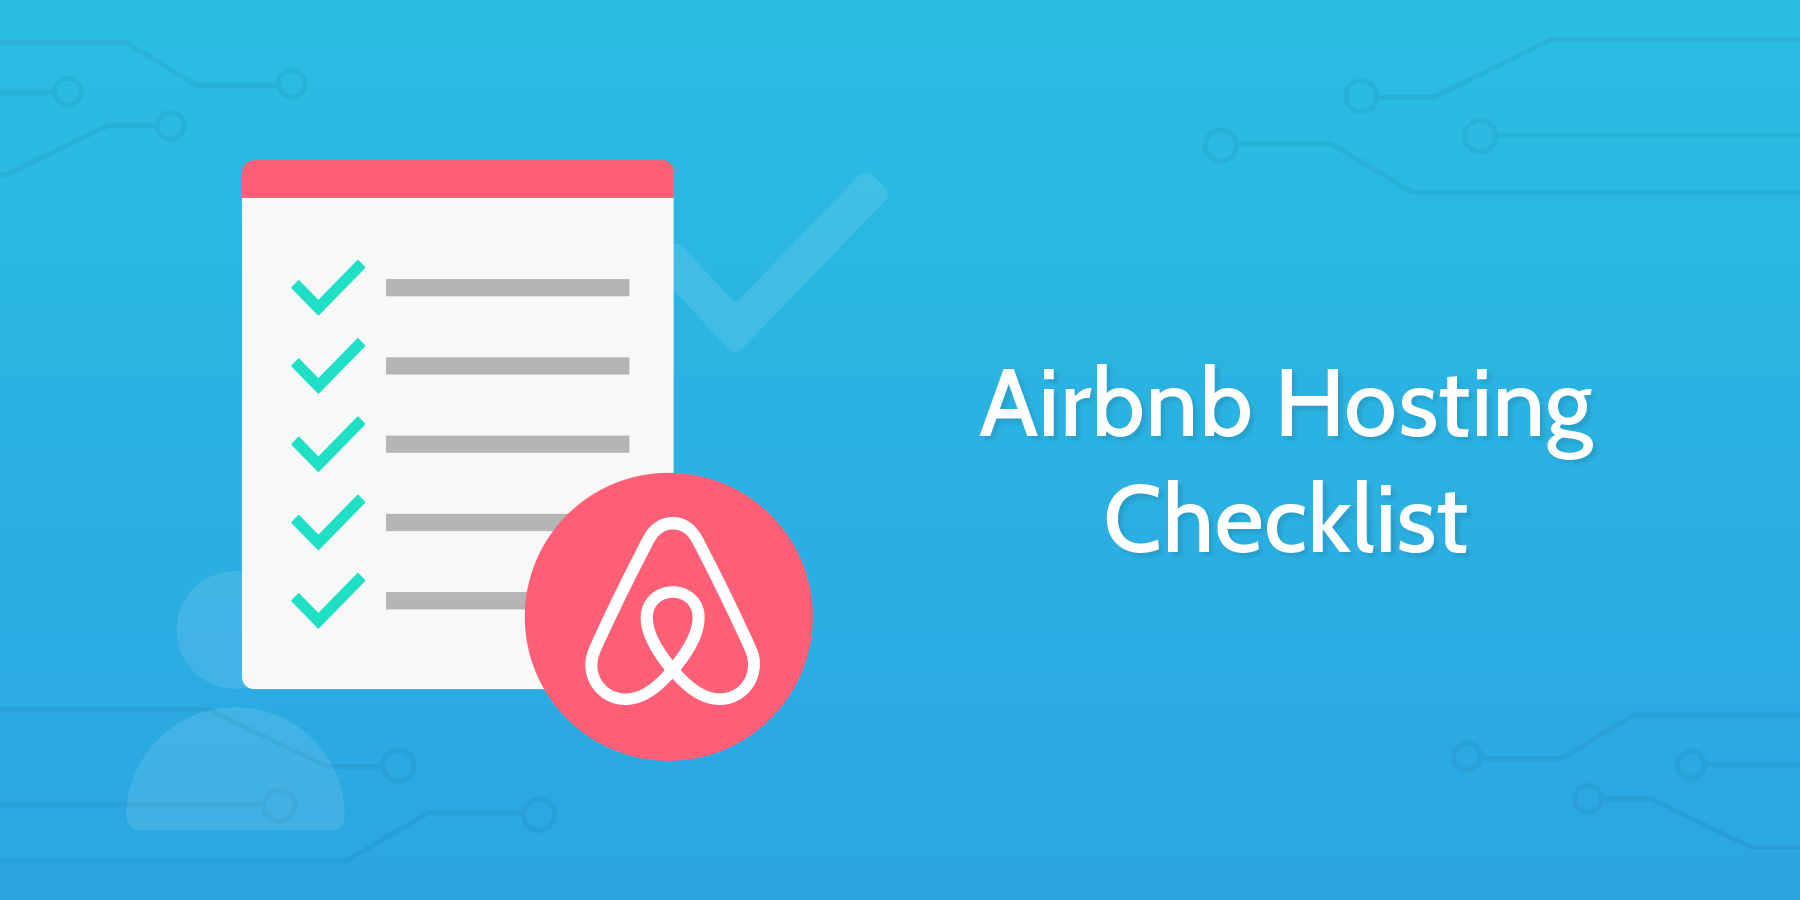 Airbnb Hosting Checklist